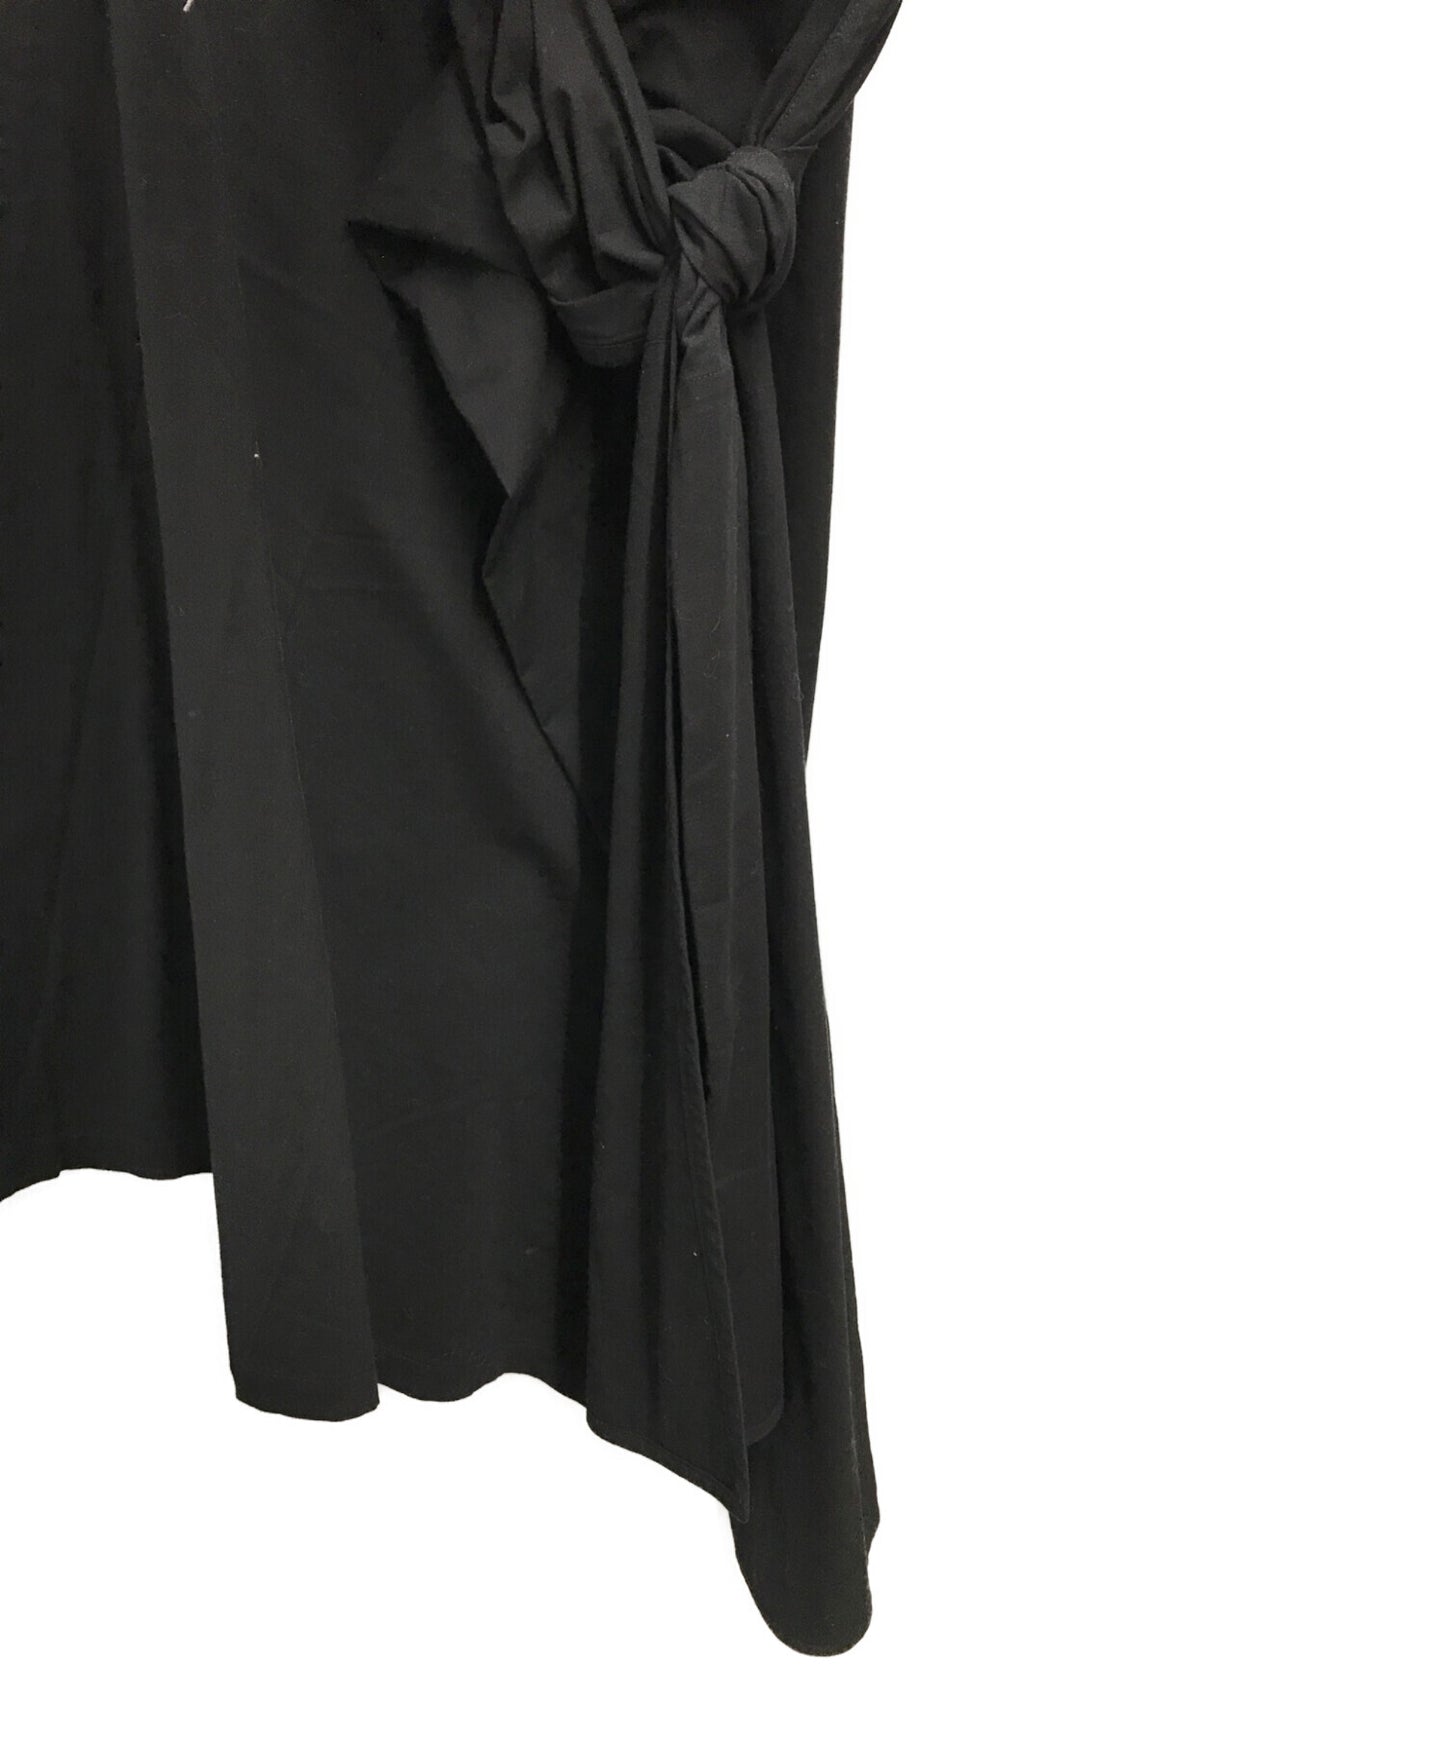 Yahji Yamamoto Femme设计形状丝带滚裙FE-S21-022